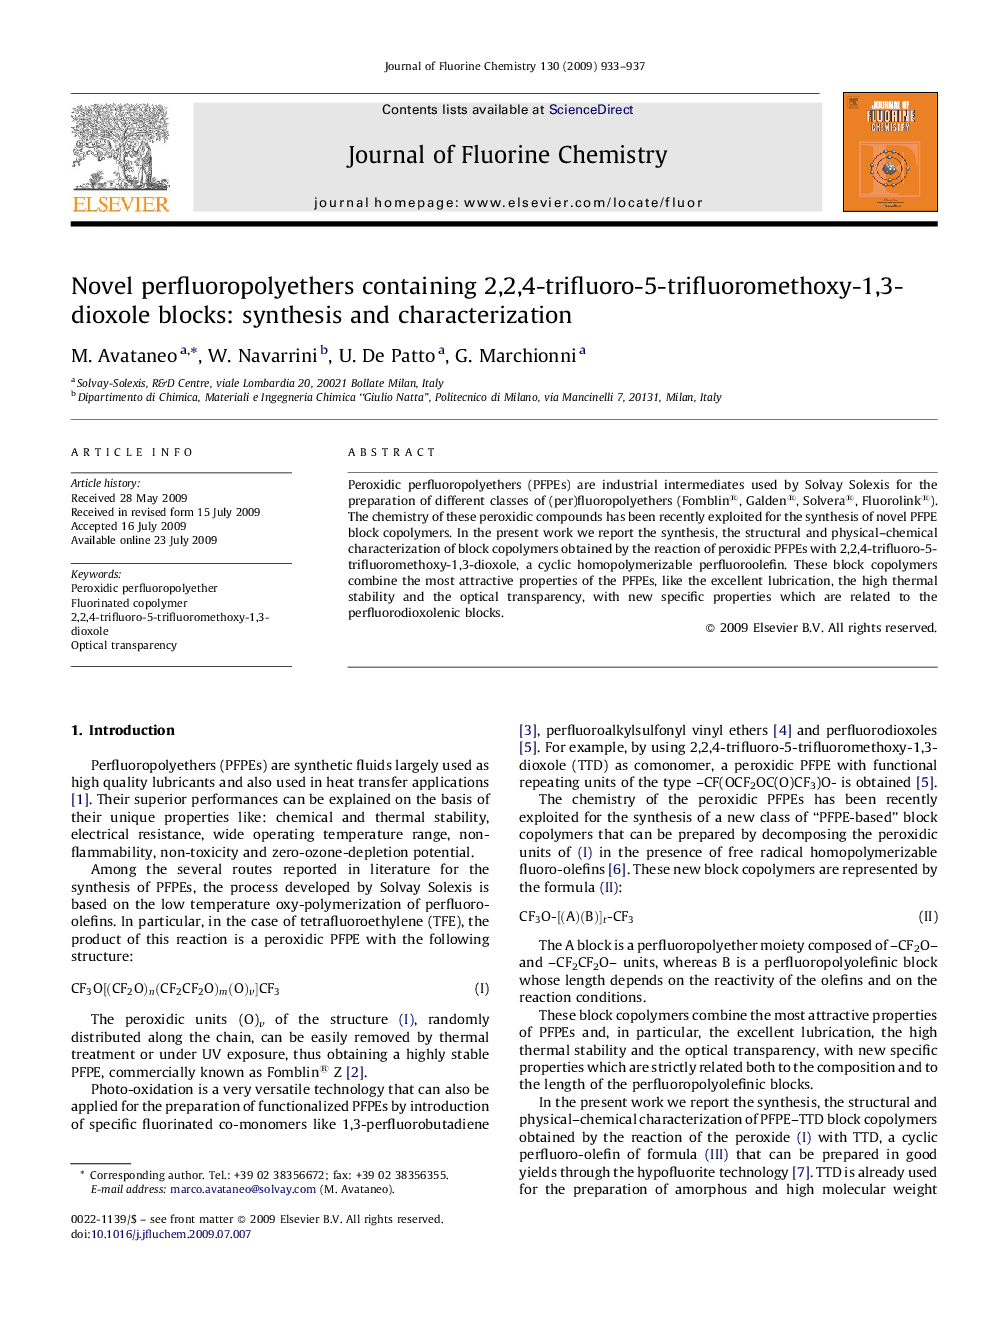 Novel perfluoropolyethers containing 2,2,4-trifluoro-5-trifluoromethoxy-1,3-dioxole blocks: synthesis and characterization